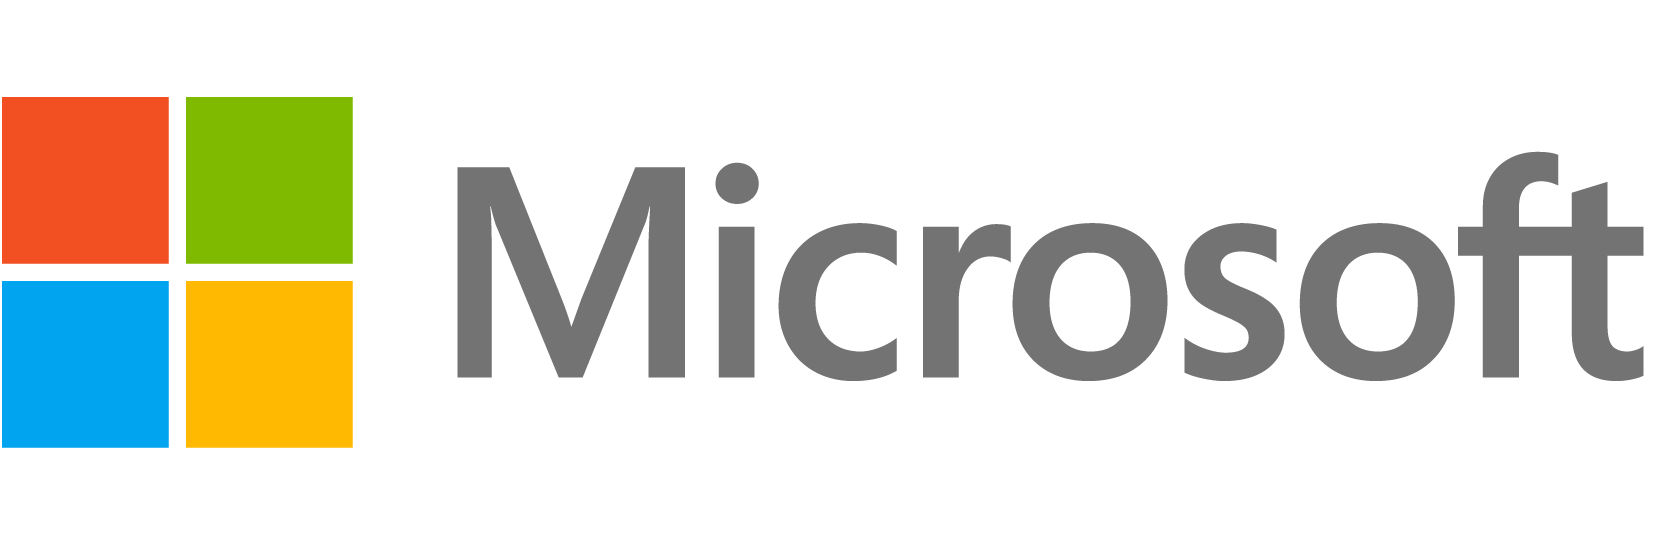 microsoft-logo-microsoft-symbol-meaning-history-png-14